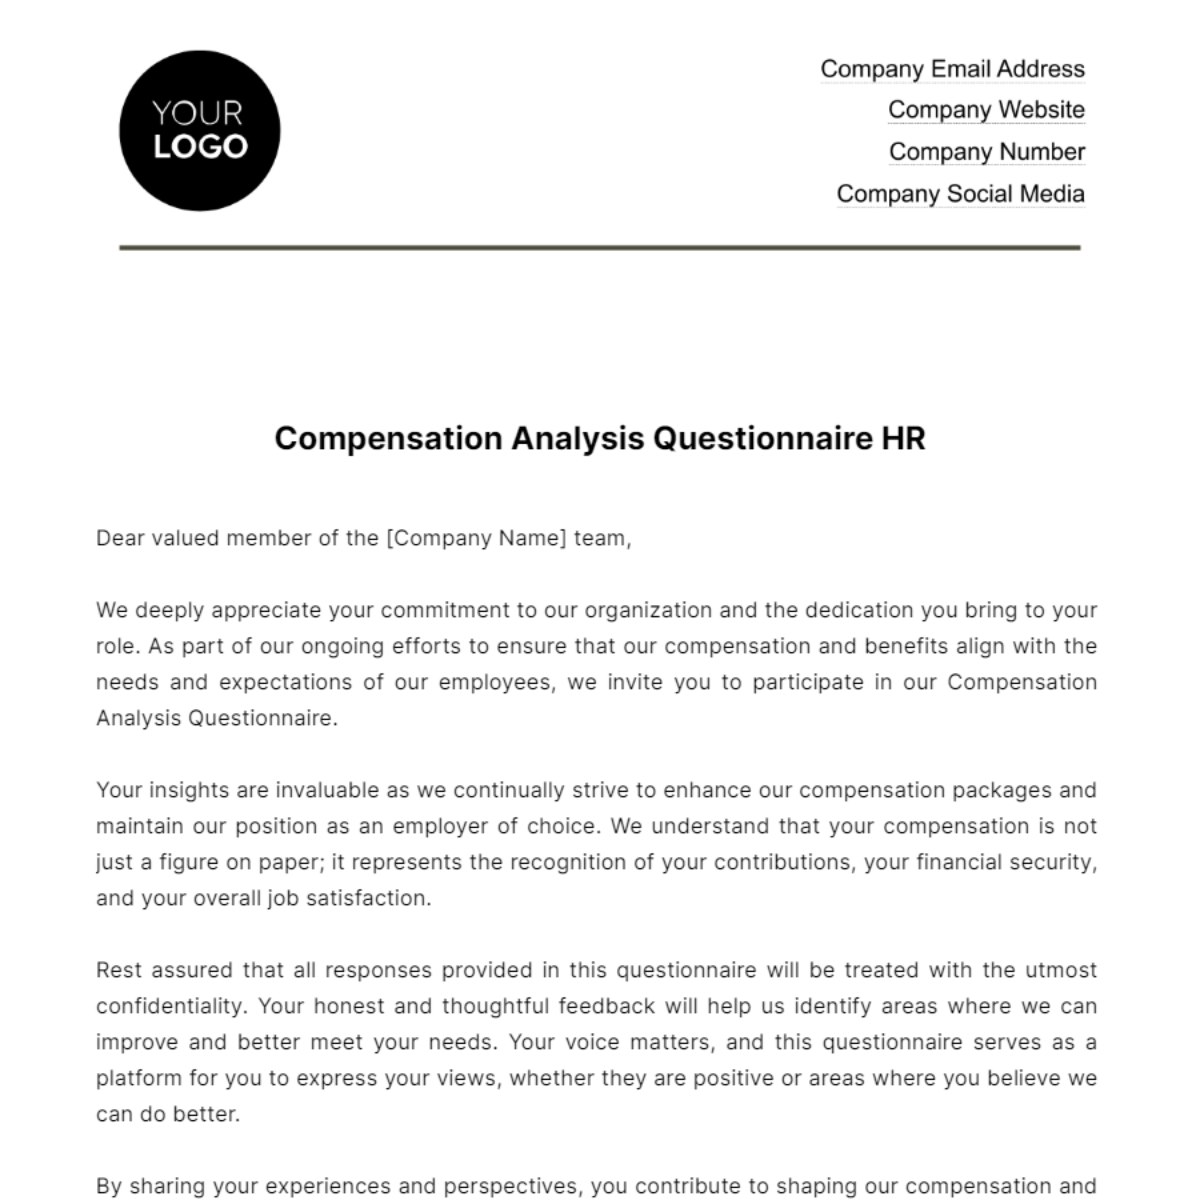 Compensation Analysis Questionnaire HR Template